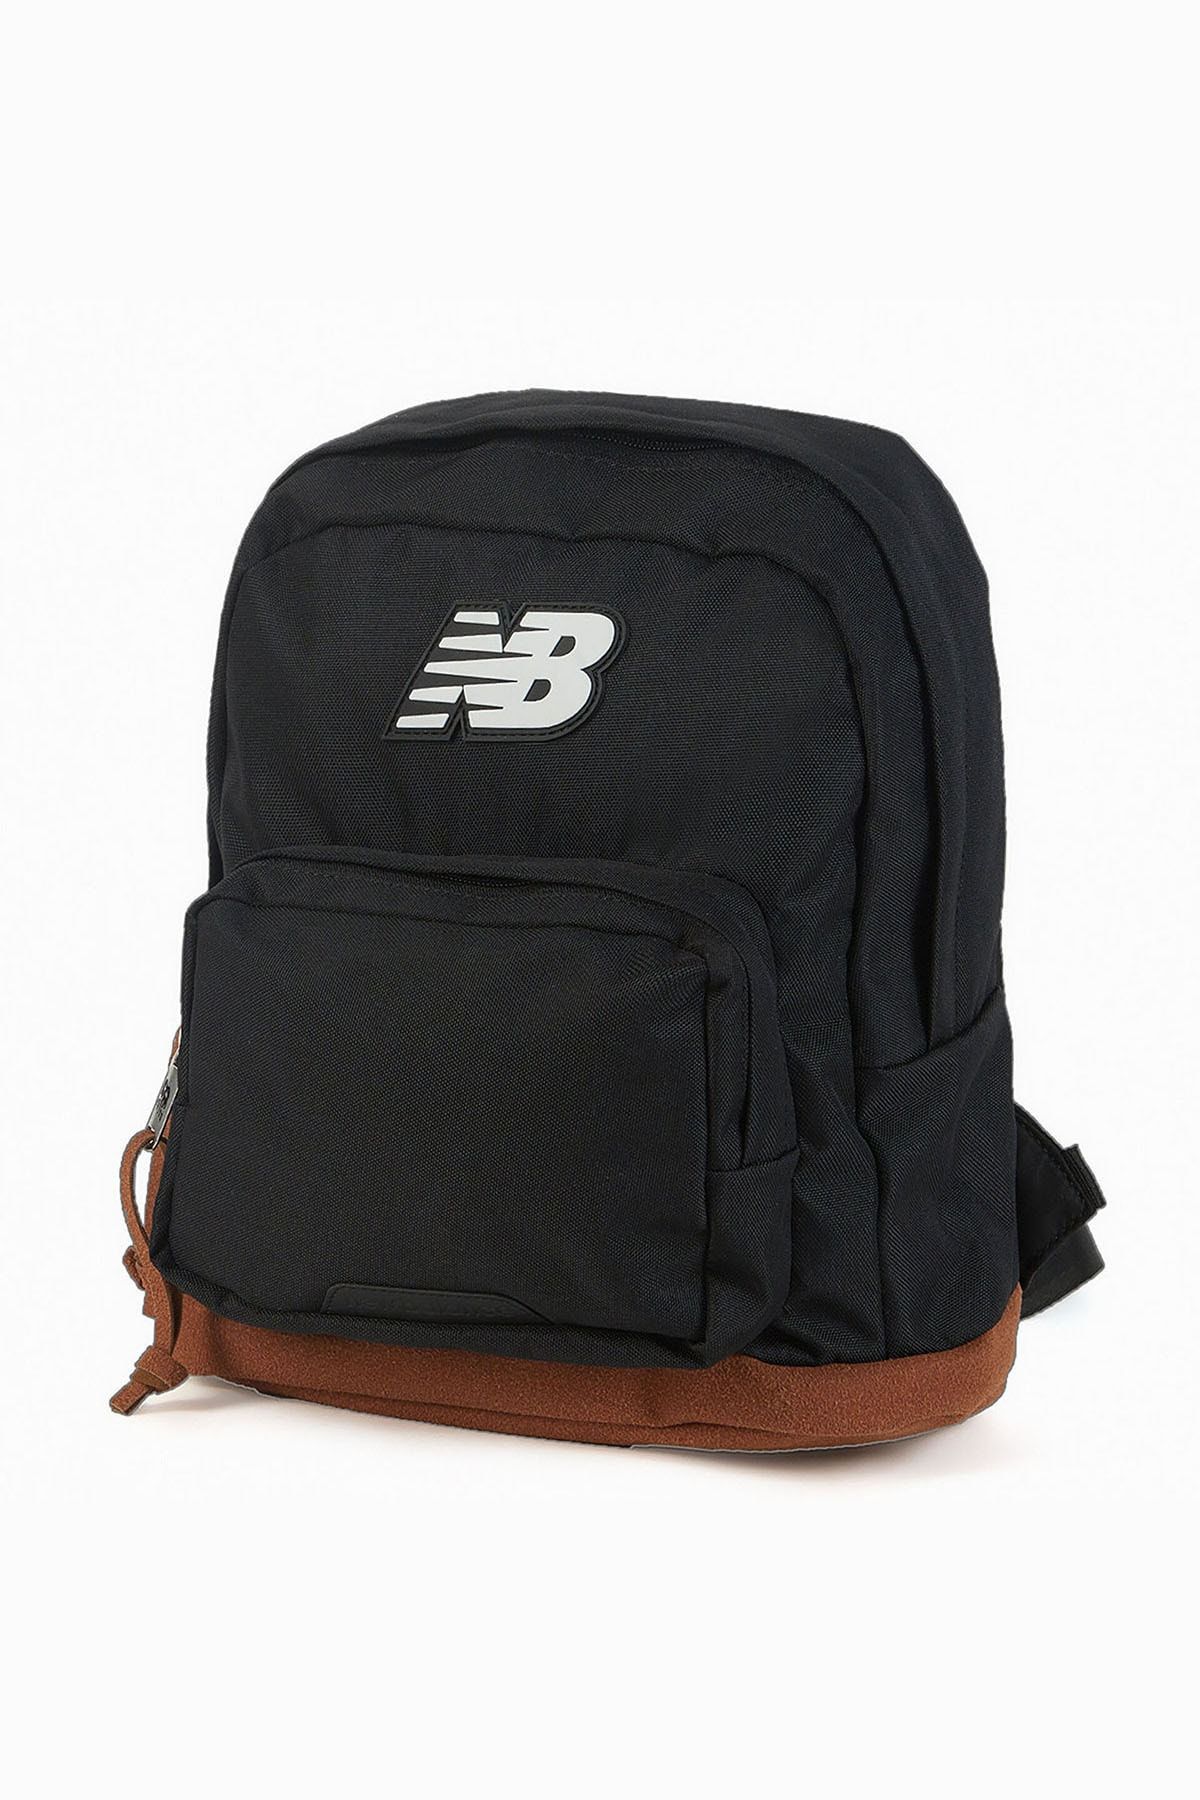 New Balance Çanta Nb Mini Backpack Anb3201-bk